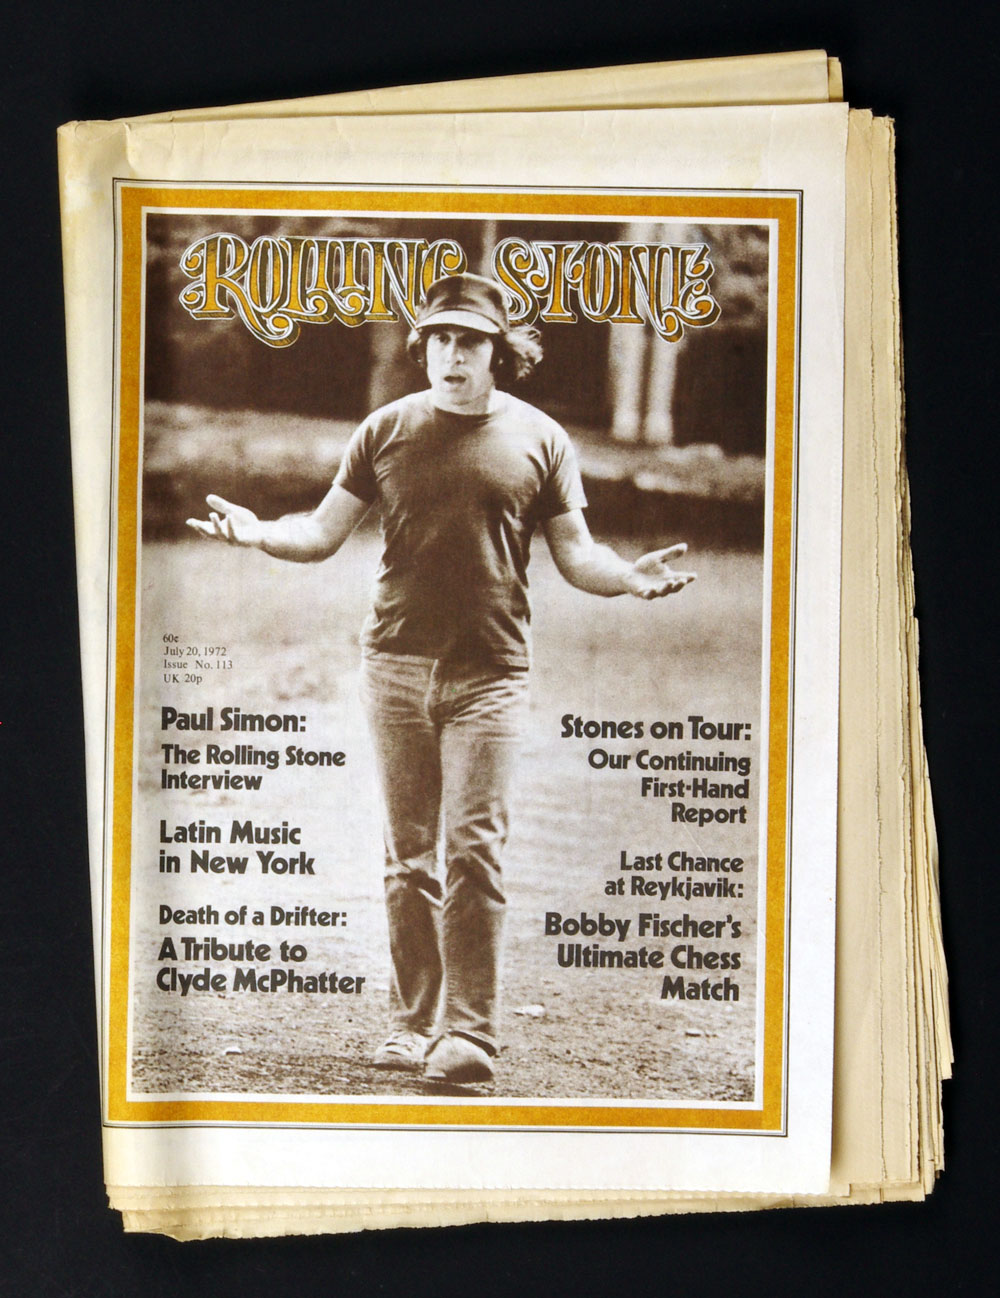 Rolling Stone Magazine Back Issue 1972 Jul 20 No.113 Paul Simon 